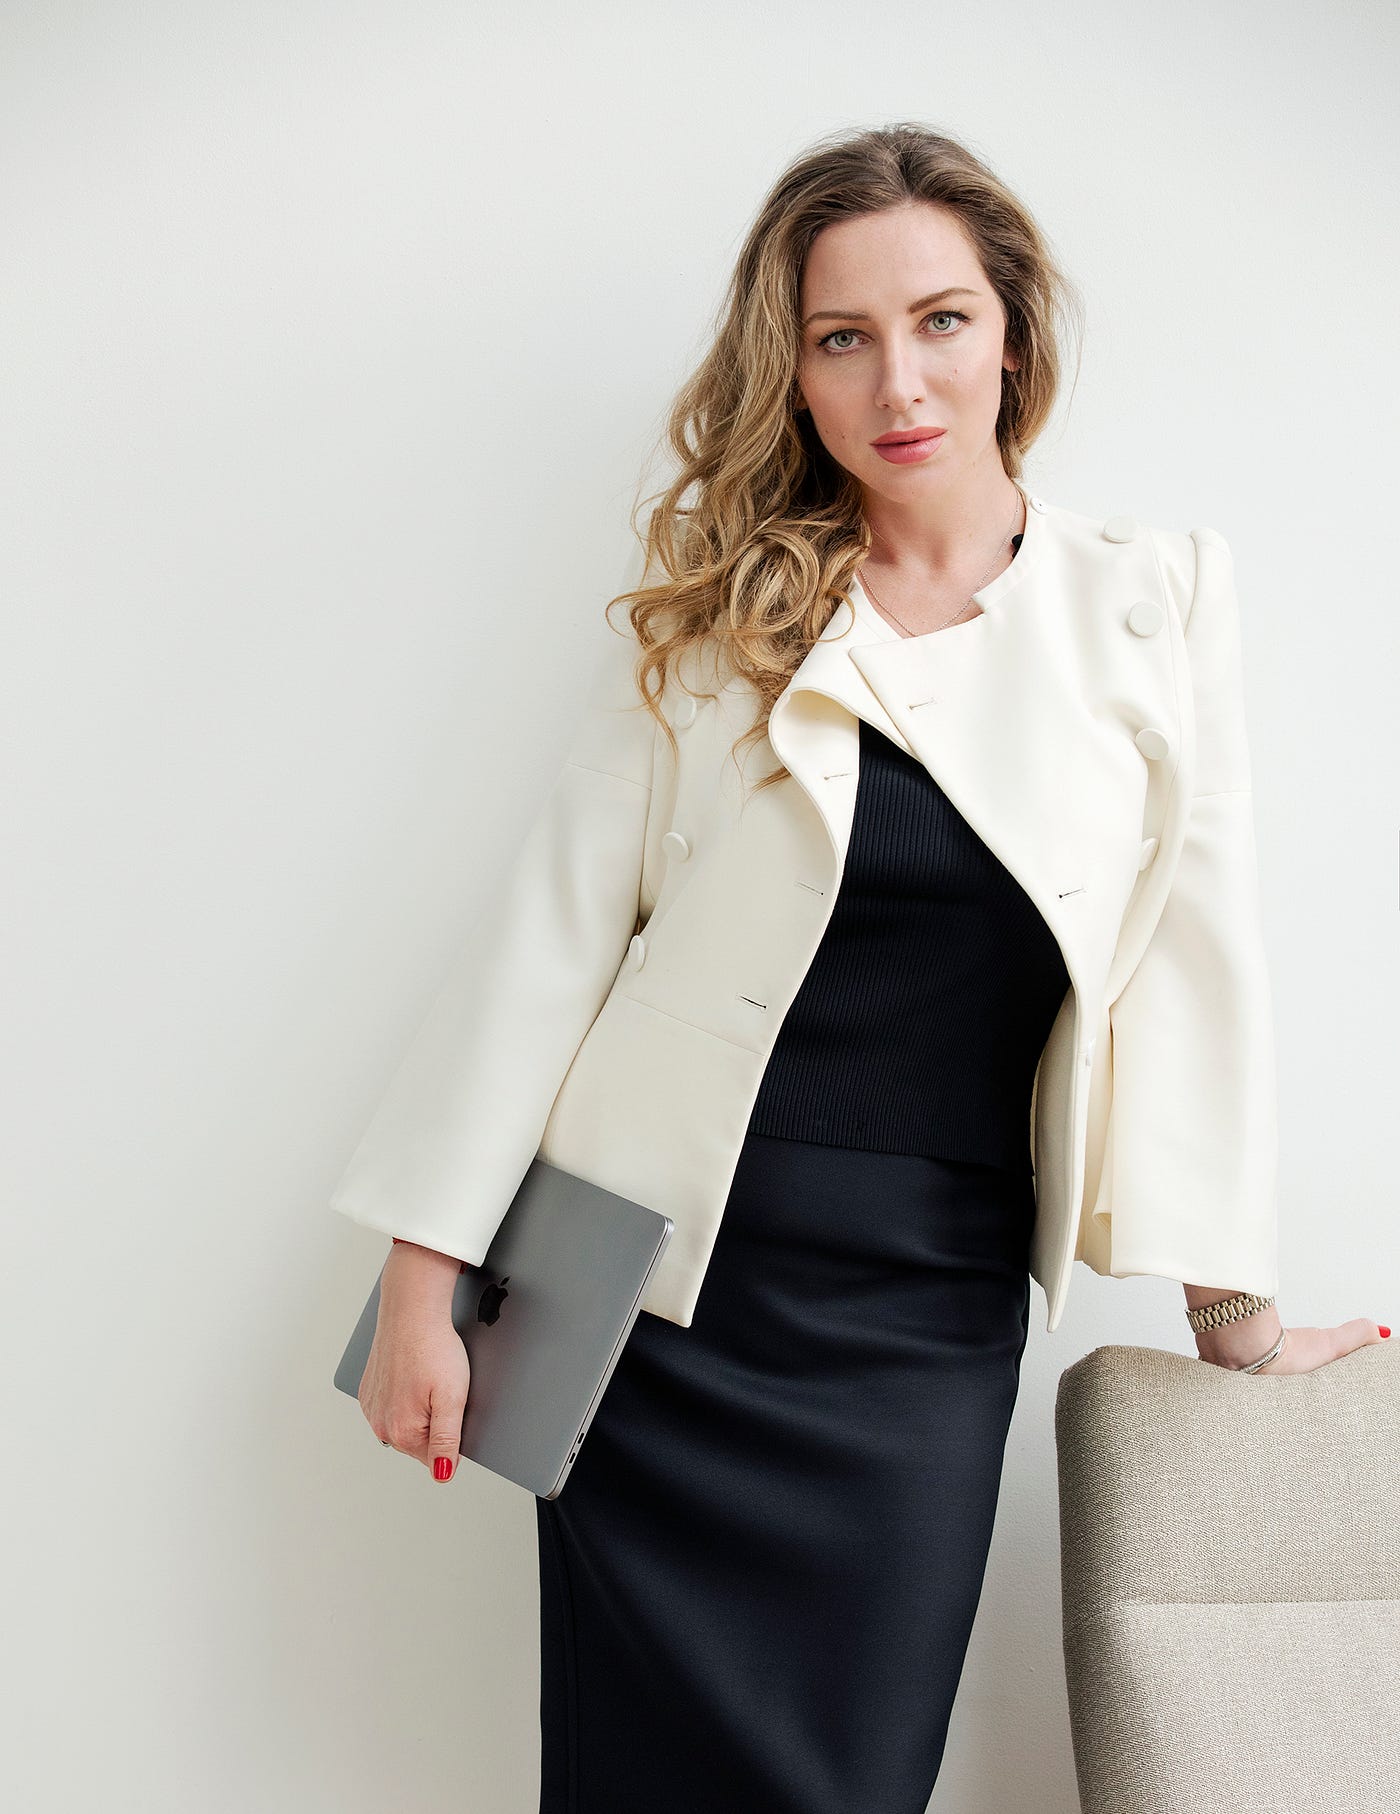 Women Leading The Finance Industry: Elena Volotovskaya of Softline